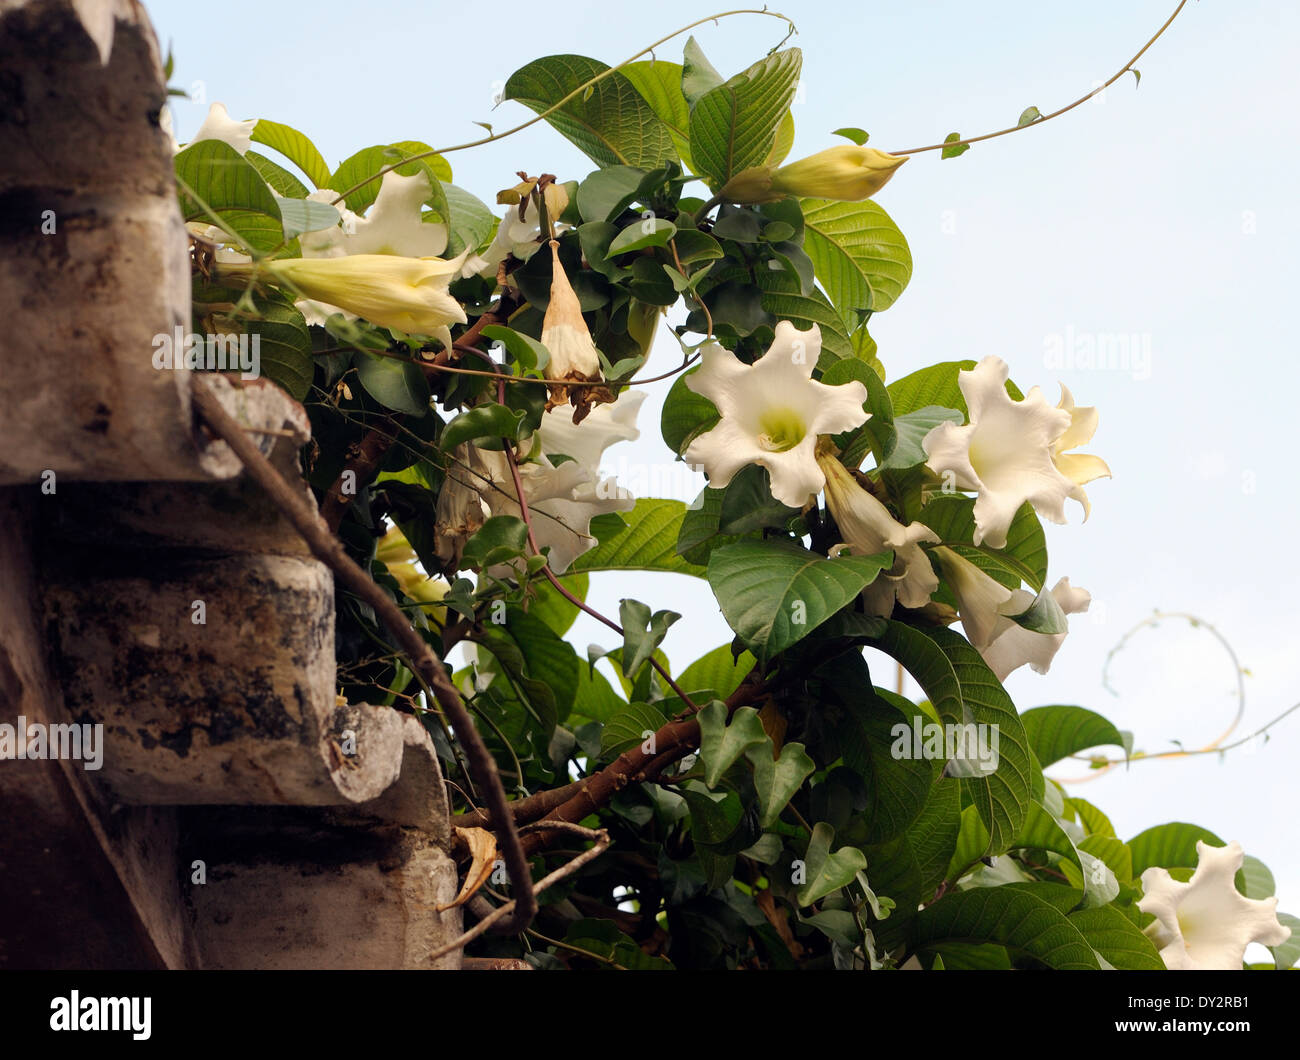 Kletterpflanze mit weißen Trompete Blumen. Antigua Guatemala, Republik Guatemala. 15 Mär 14 Stockfoto